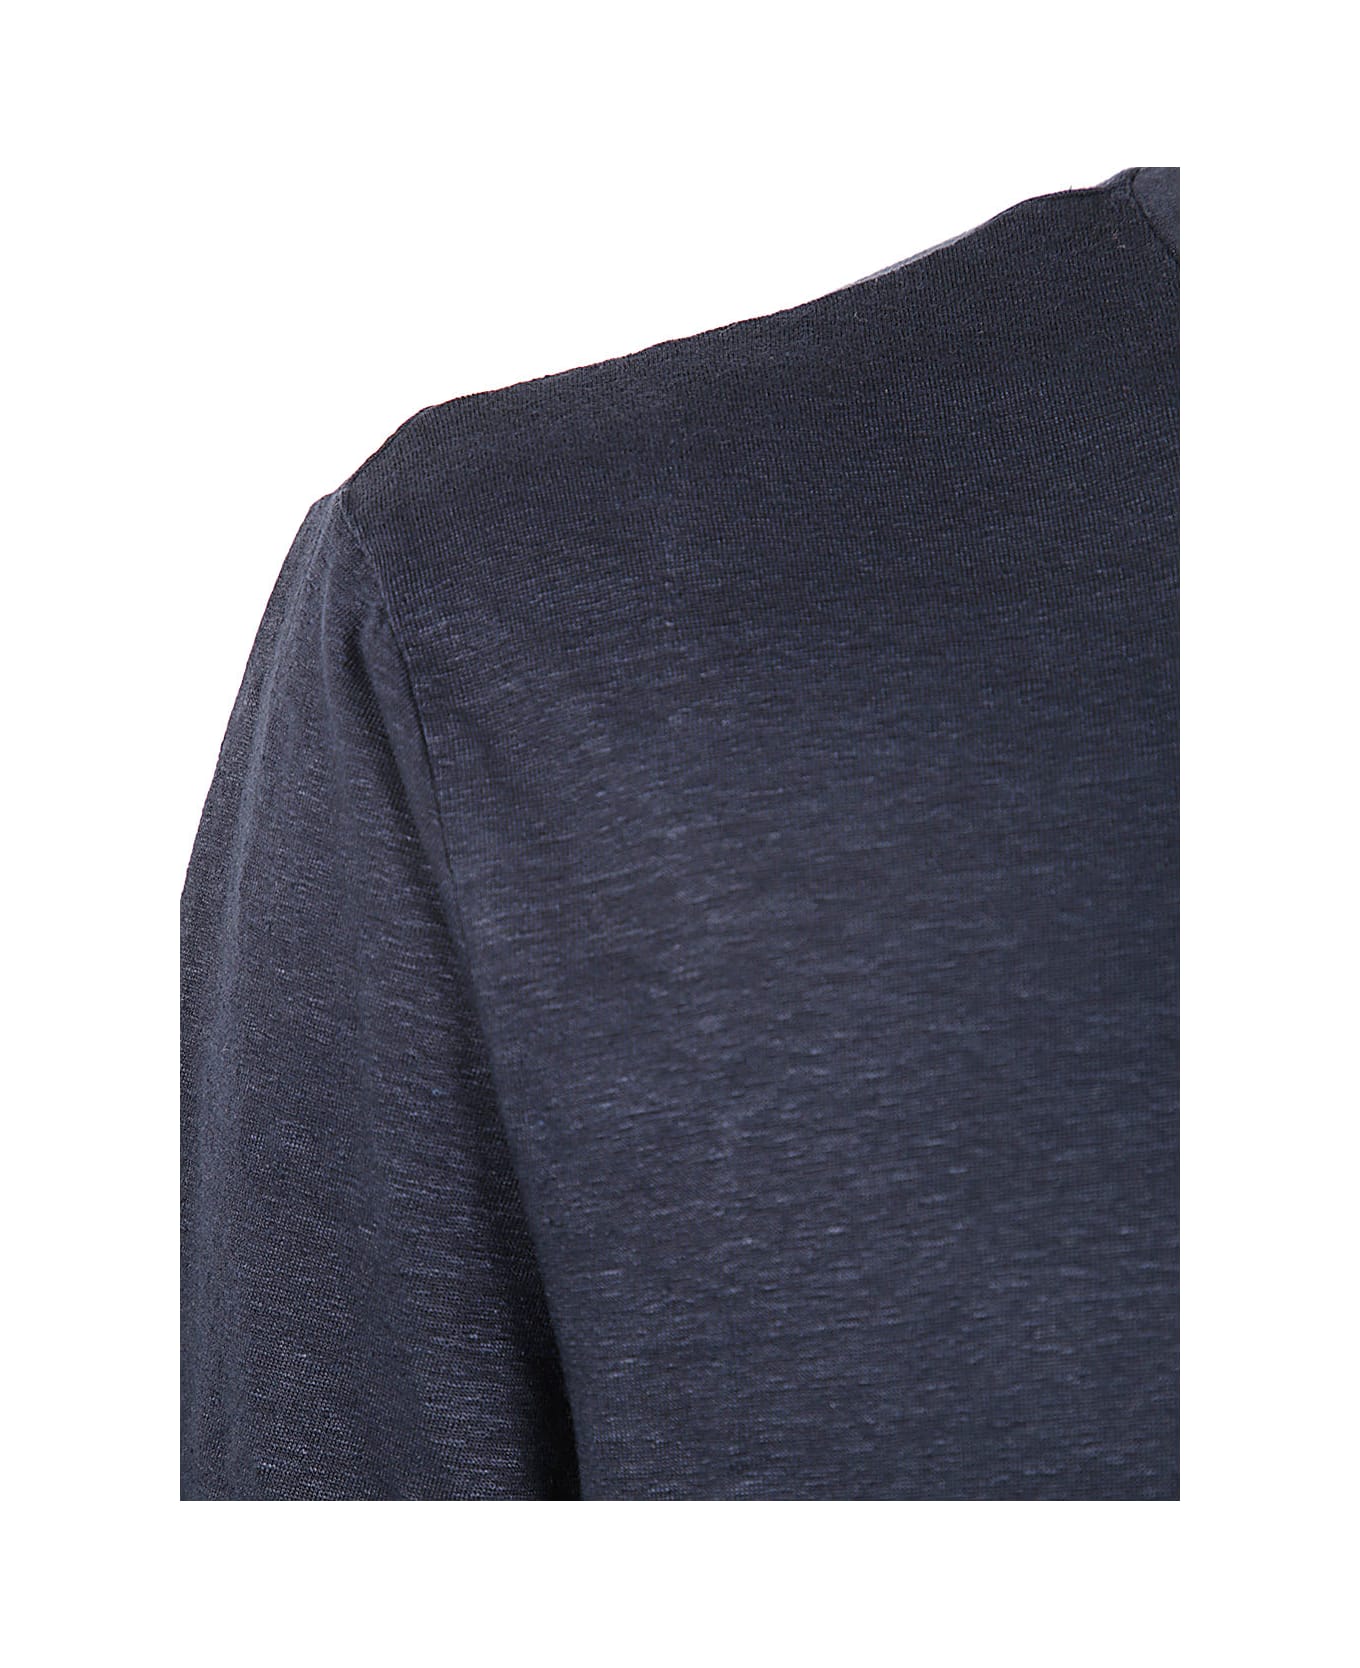 MD75 Linen T-shirt - Basic Blue シャツ